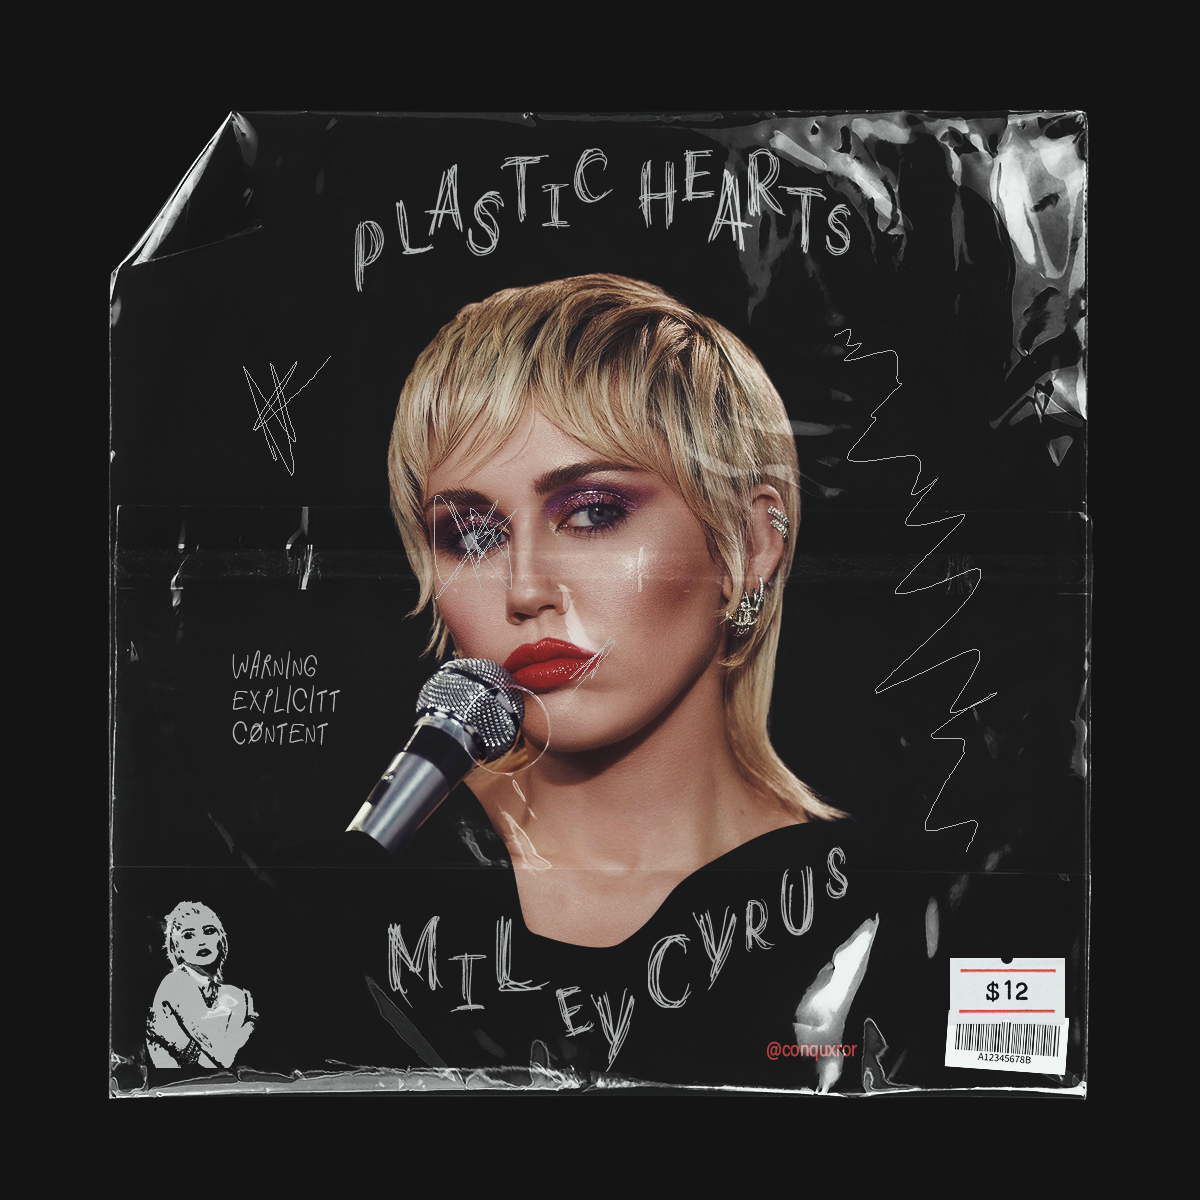 Plastic Hearts - Album by Miley Cyrus